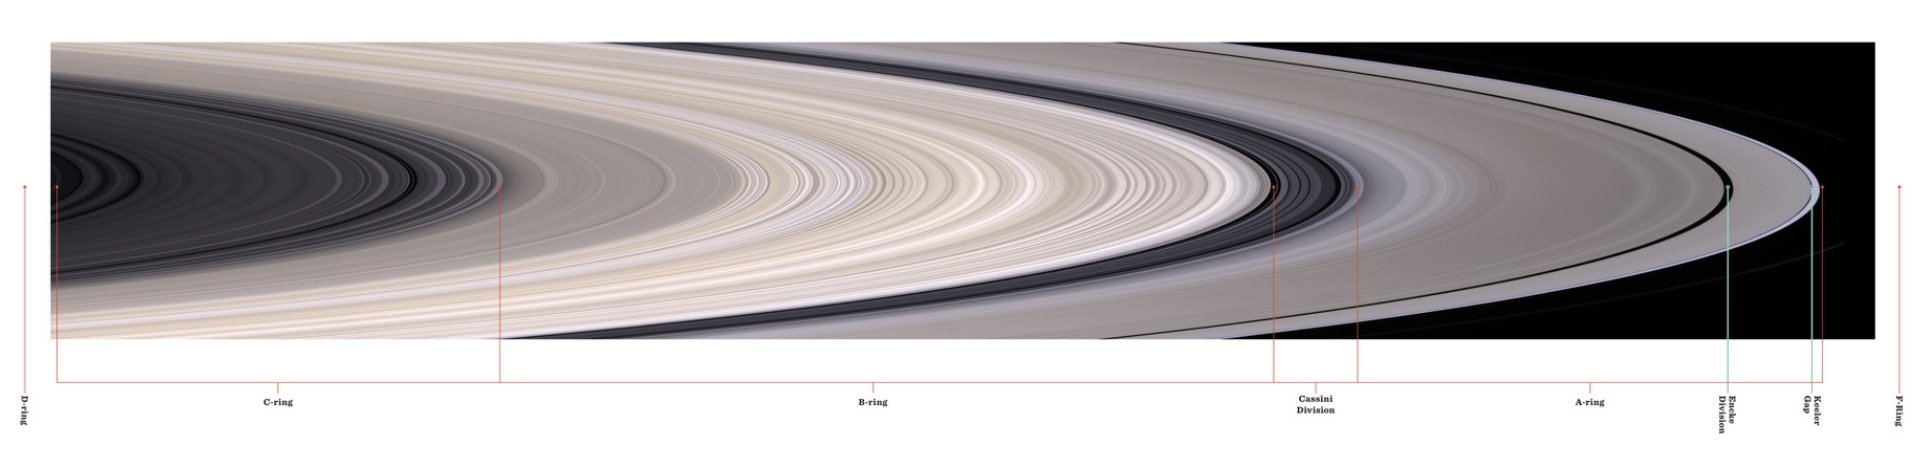 Saturns Rings 1.jpeg